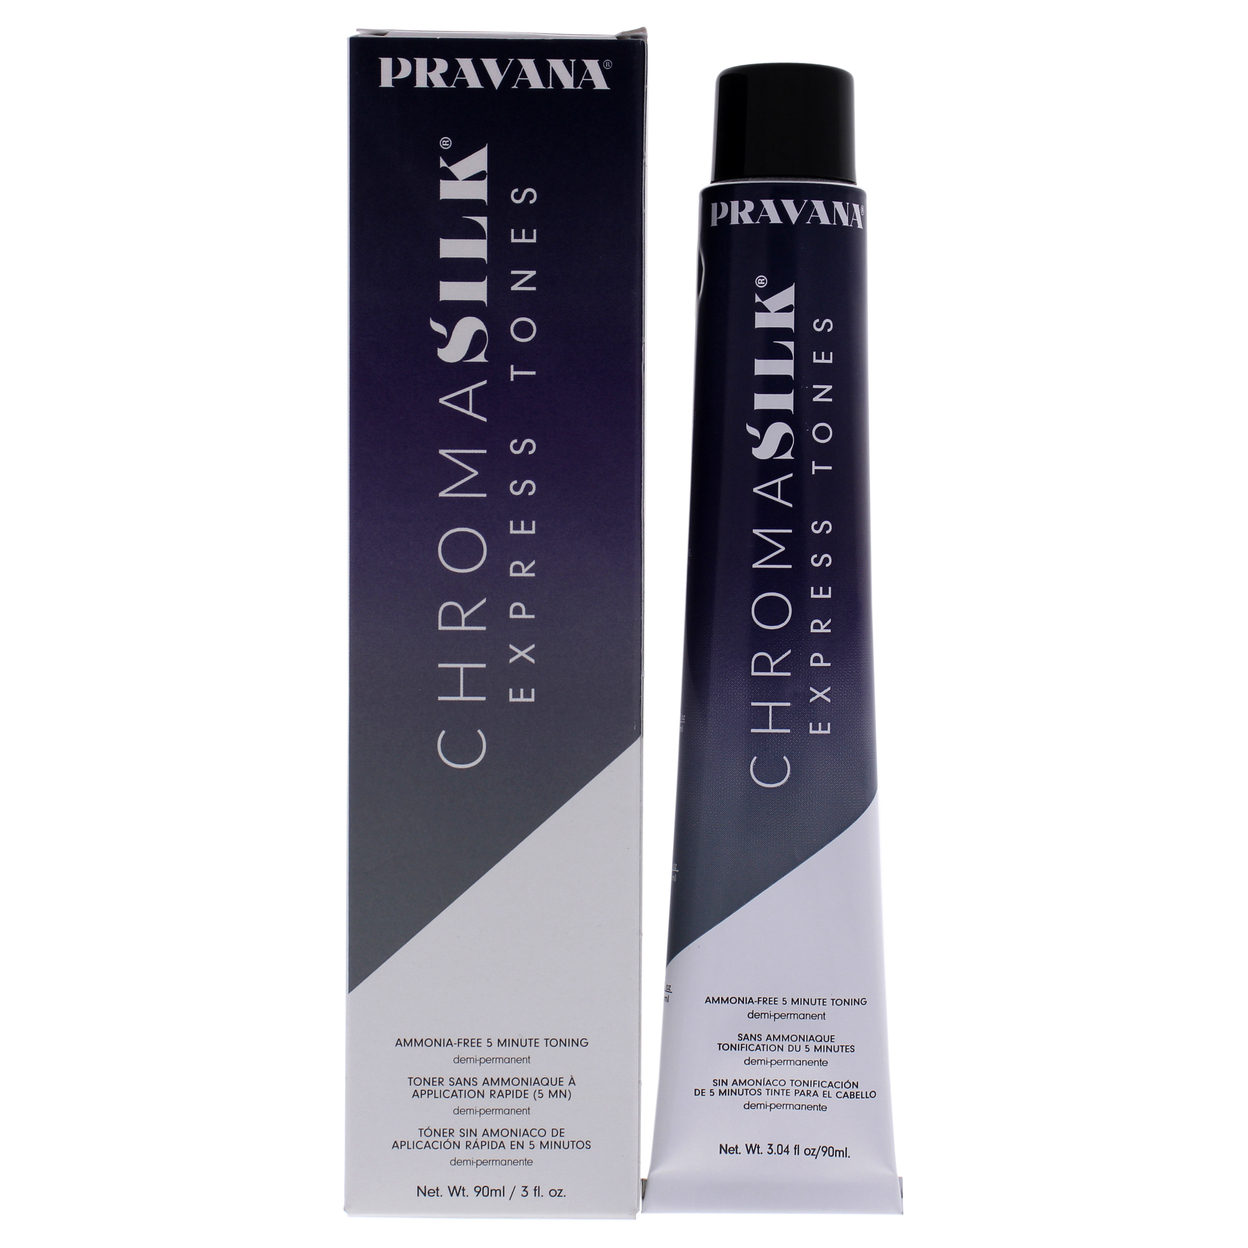 Pravana ChromaSilk Express Tones - Beige Hair Color 3 Oz